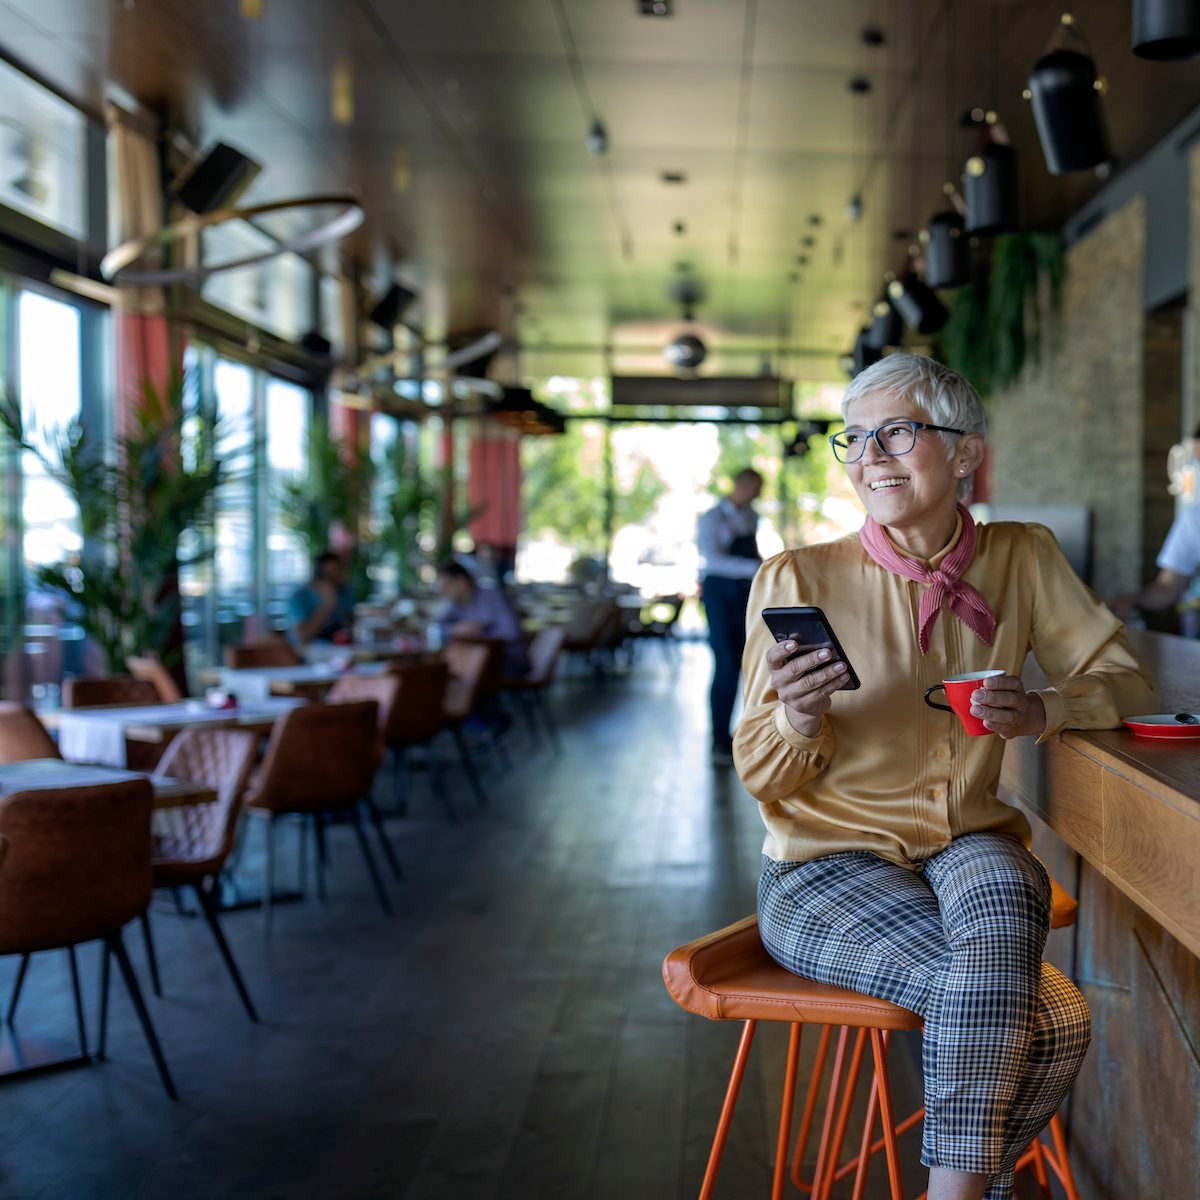 Woman alone in restaurant